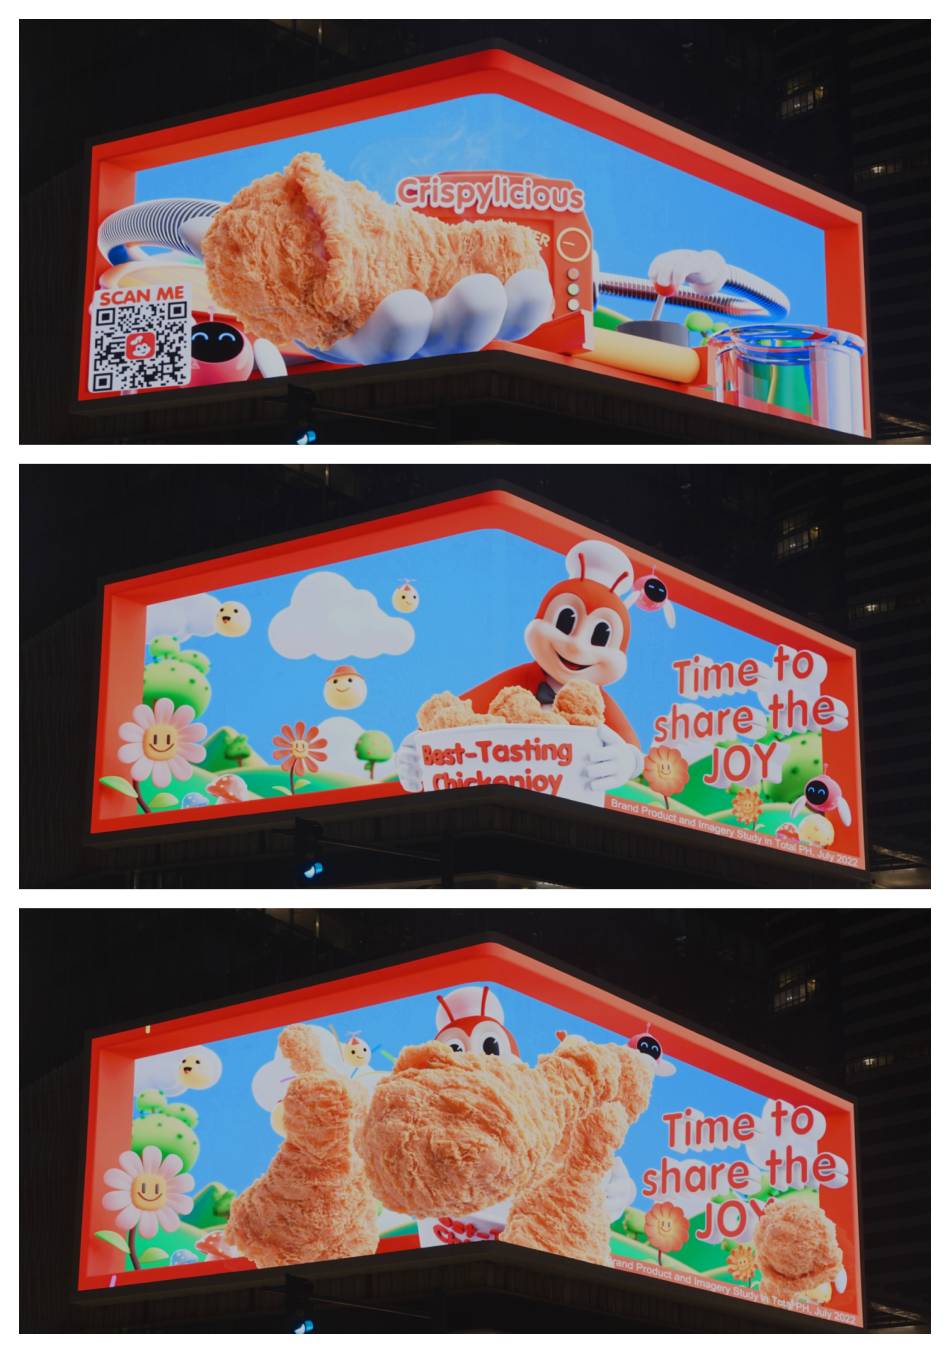 Jollibee shares the joy through its newest 3D billboard located at 5th Ave., Bonifacio Global City. Photo source: Jollibee